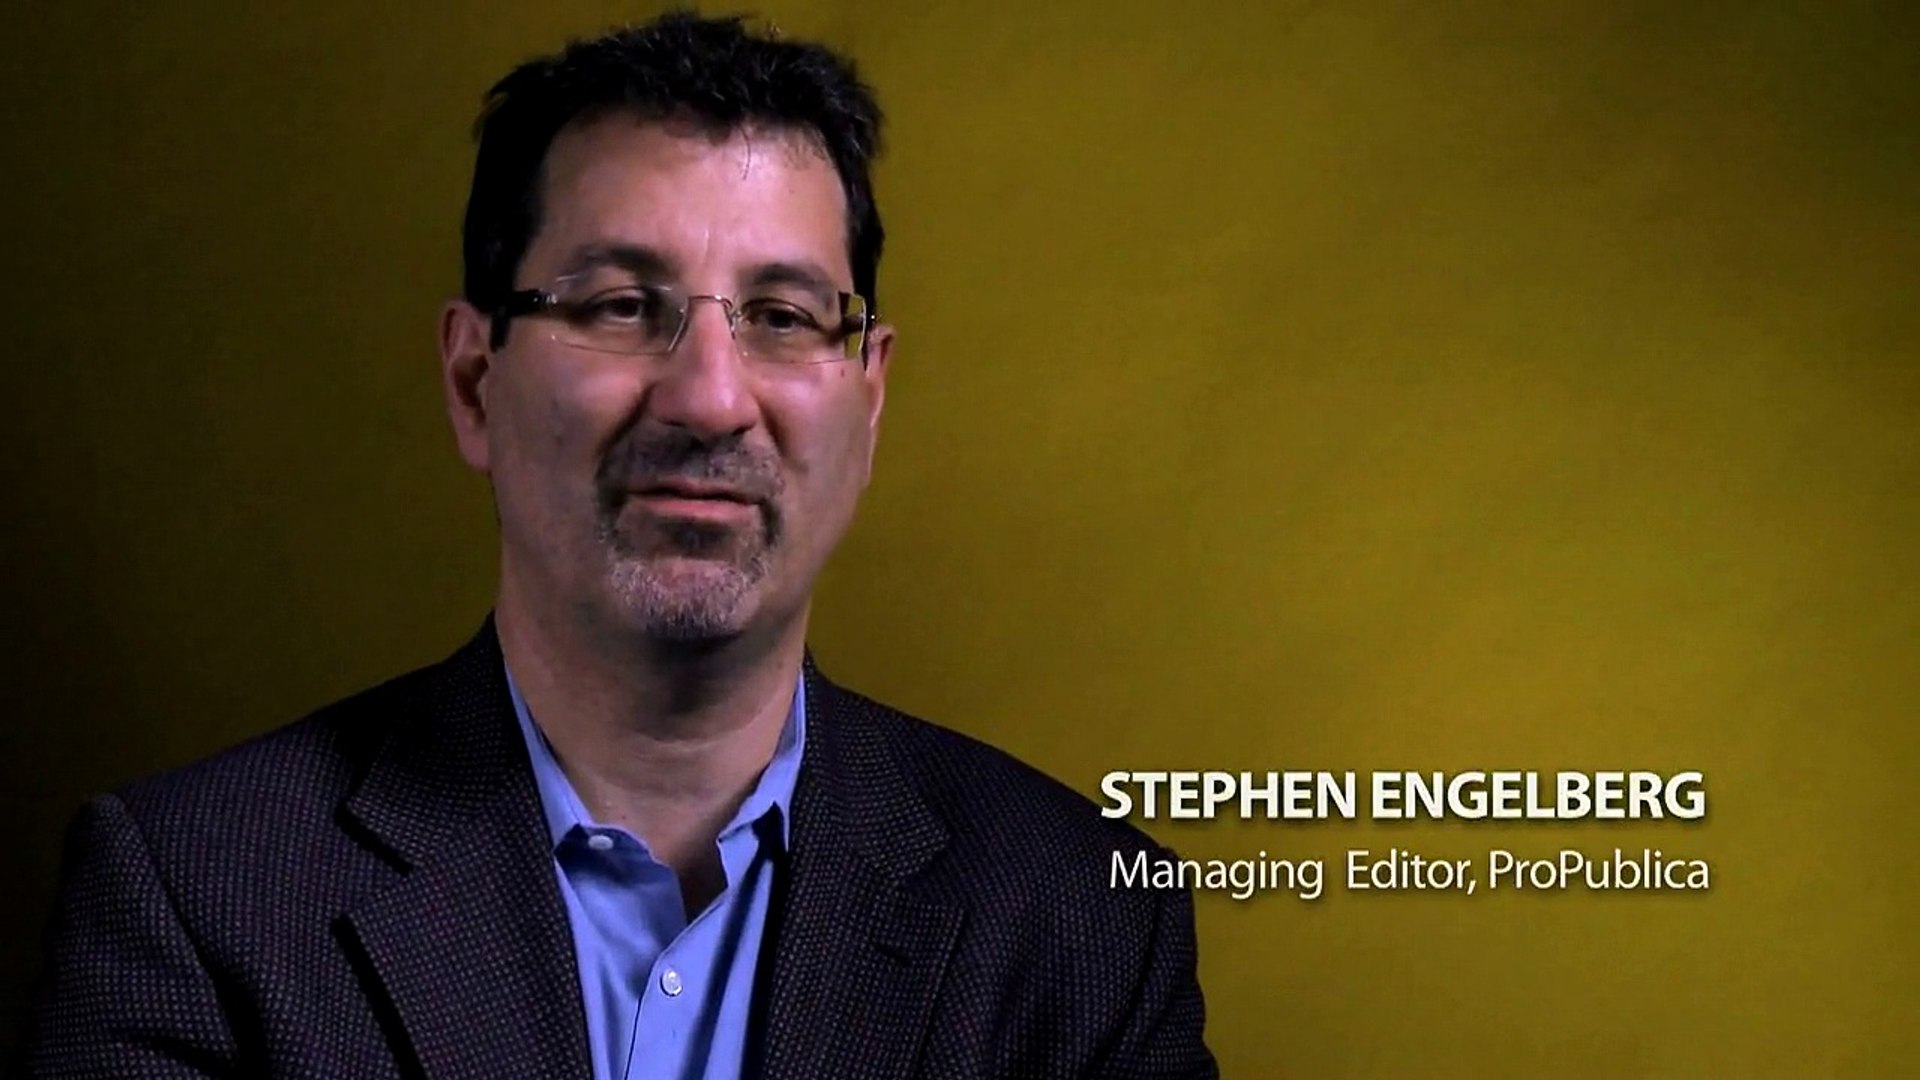 Stephen Engelberg on the Non-Profit Model